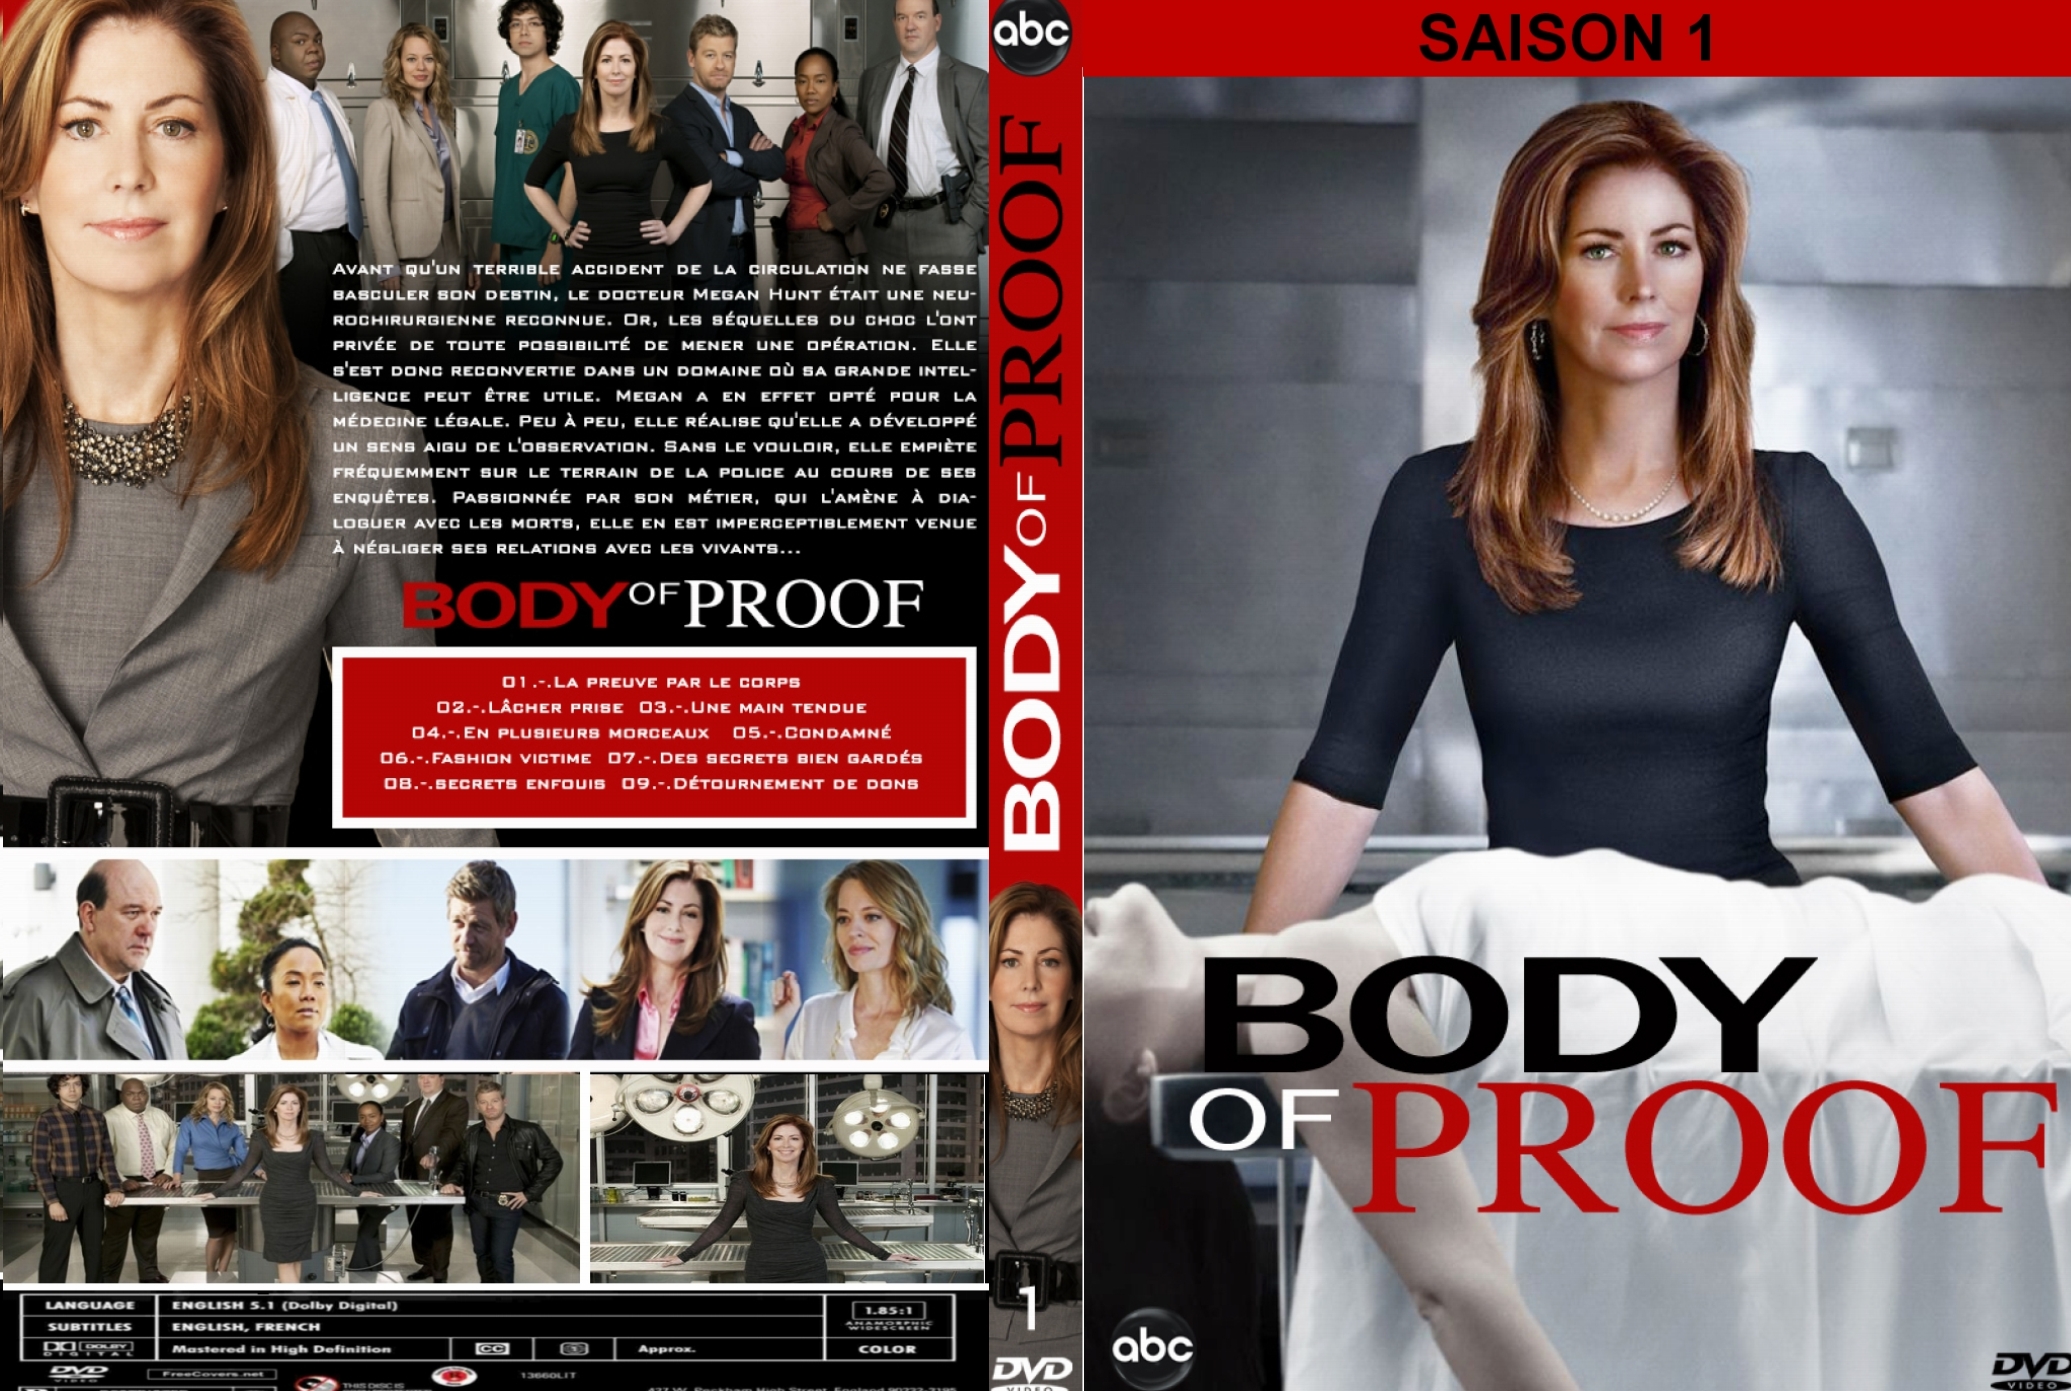 Jaquette DVD Body Of Proof Saison 1 custom